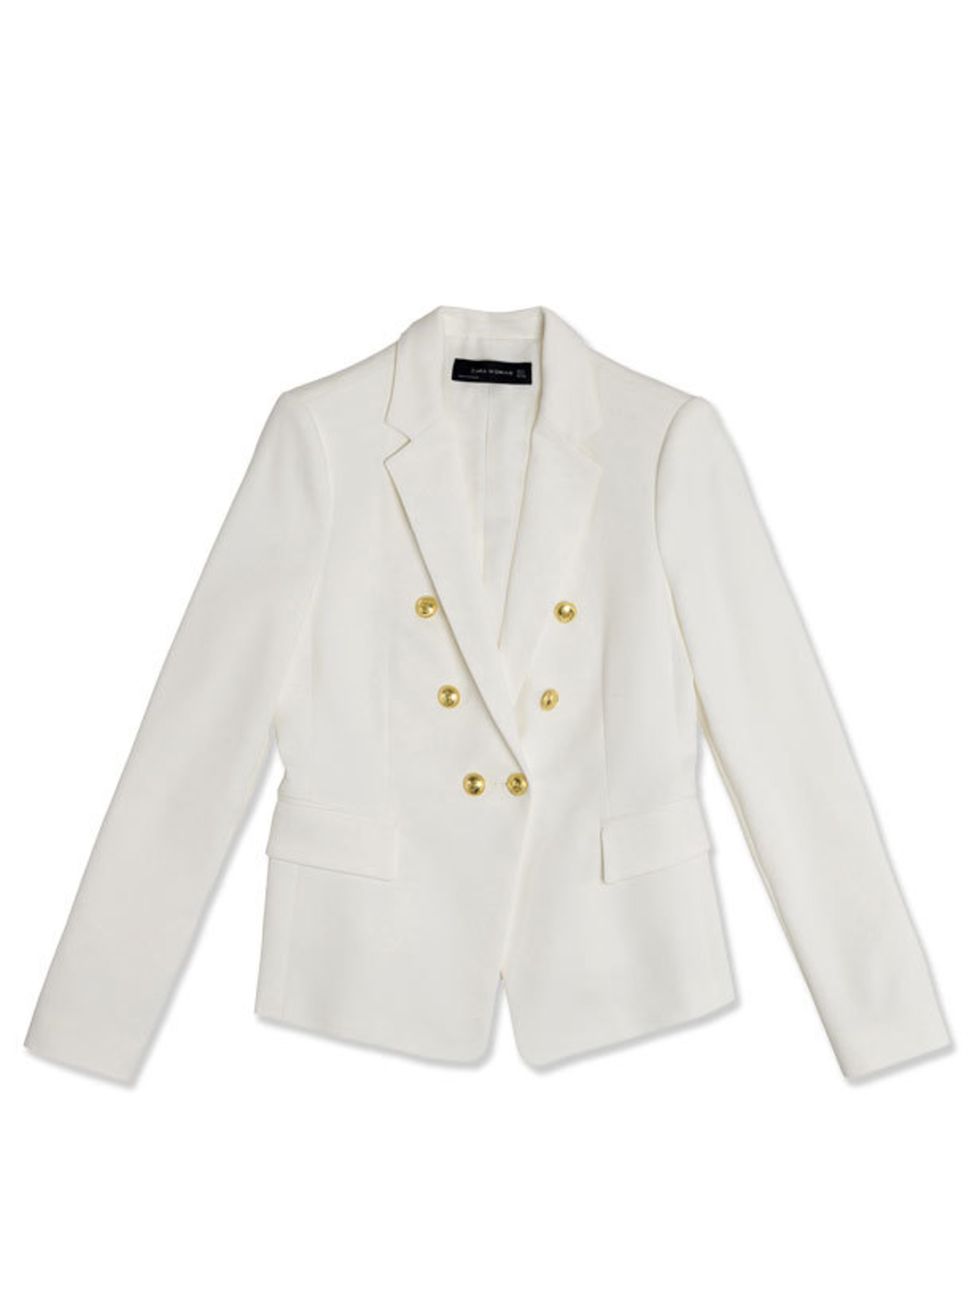 <p>Zara gold button blazer, £69.99, for stockists call 0207 534 9500</p>